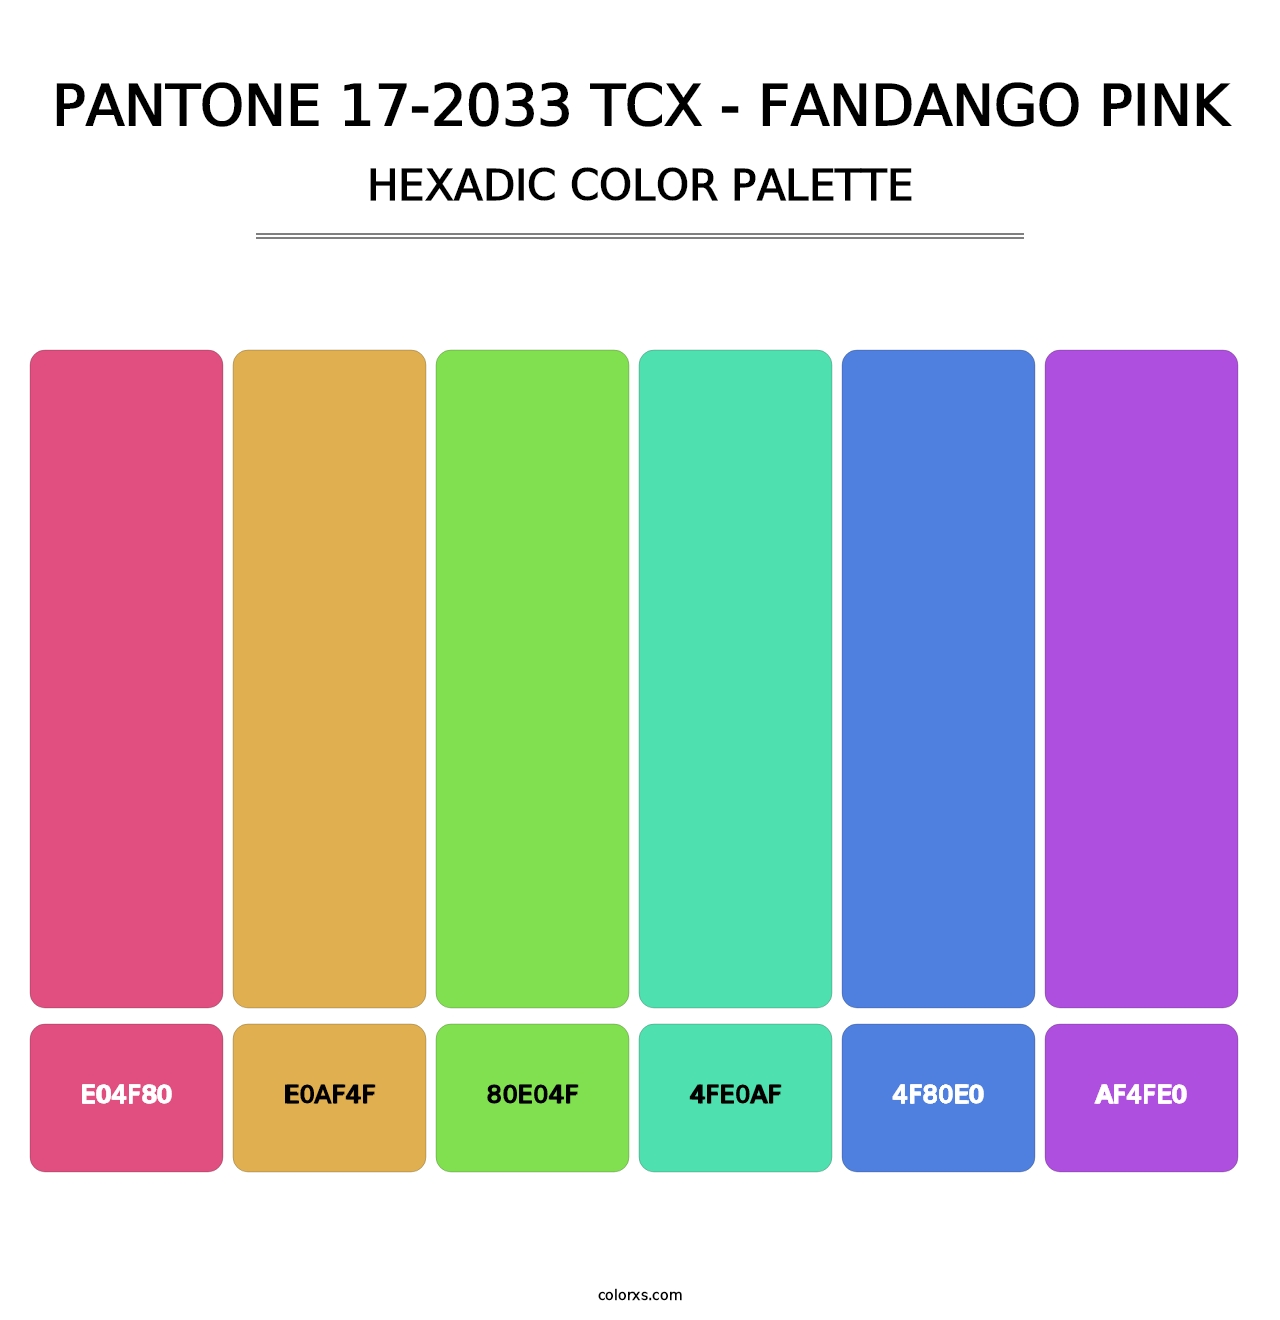 PANTONE 17-2033 TCX - Fandango Pink - Hexadic Color Palette